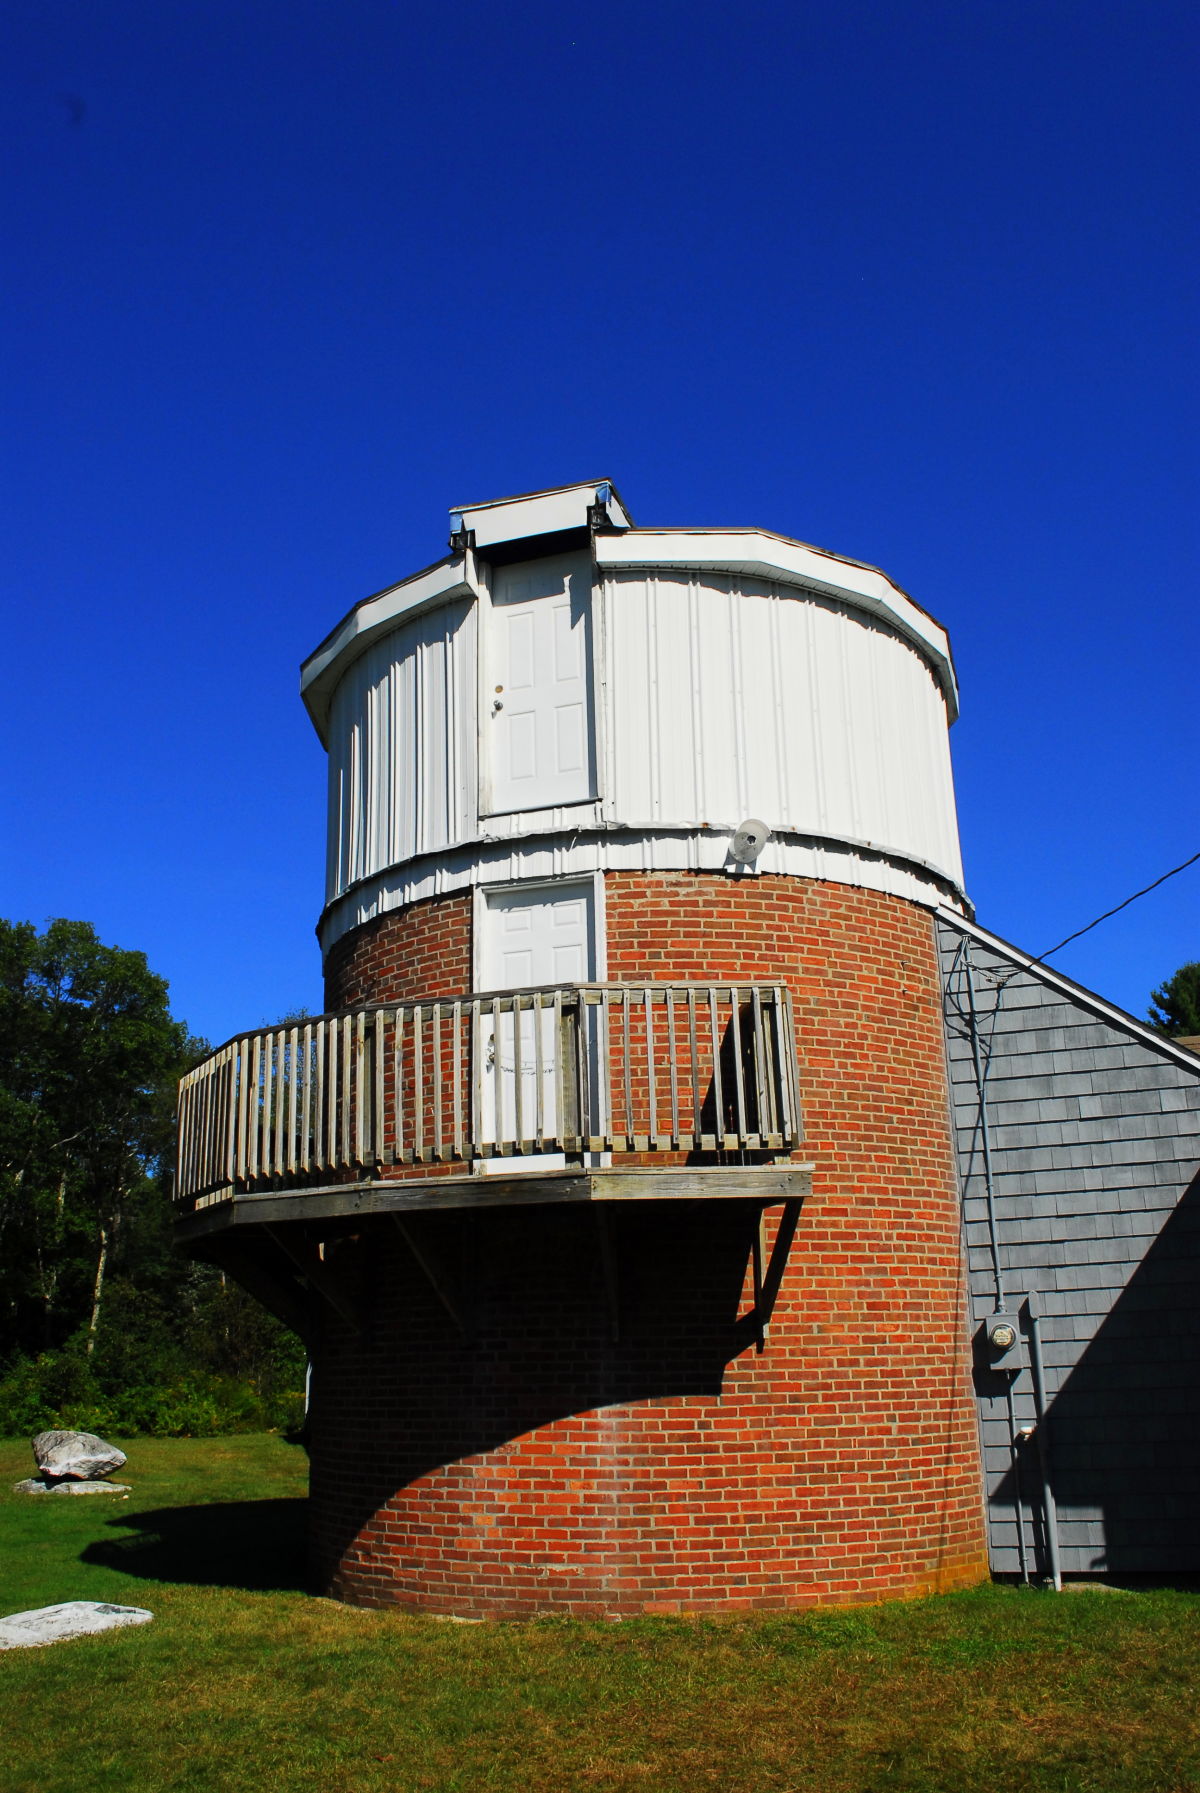 Seagrave Memorial Observatory North Scituate Ri 02857